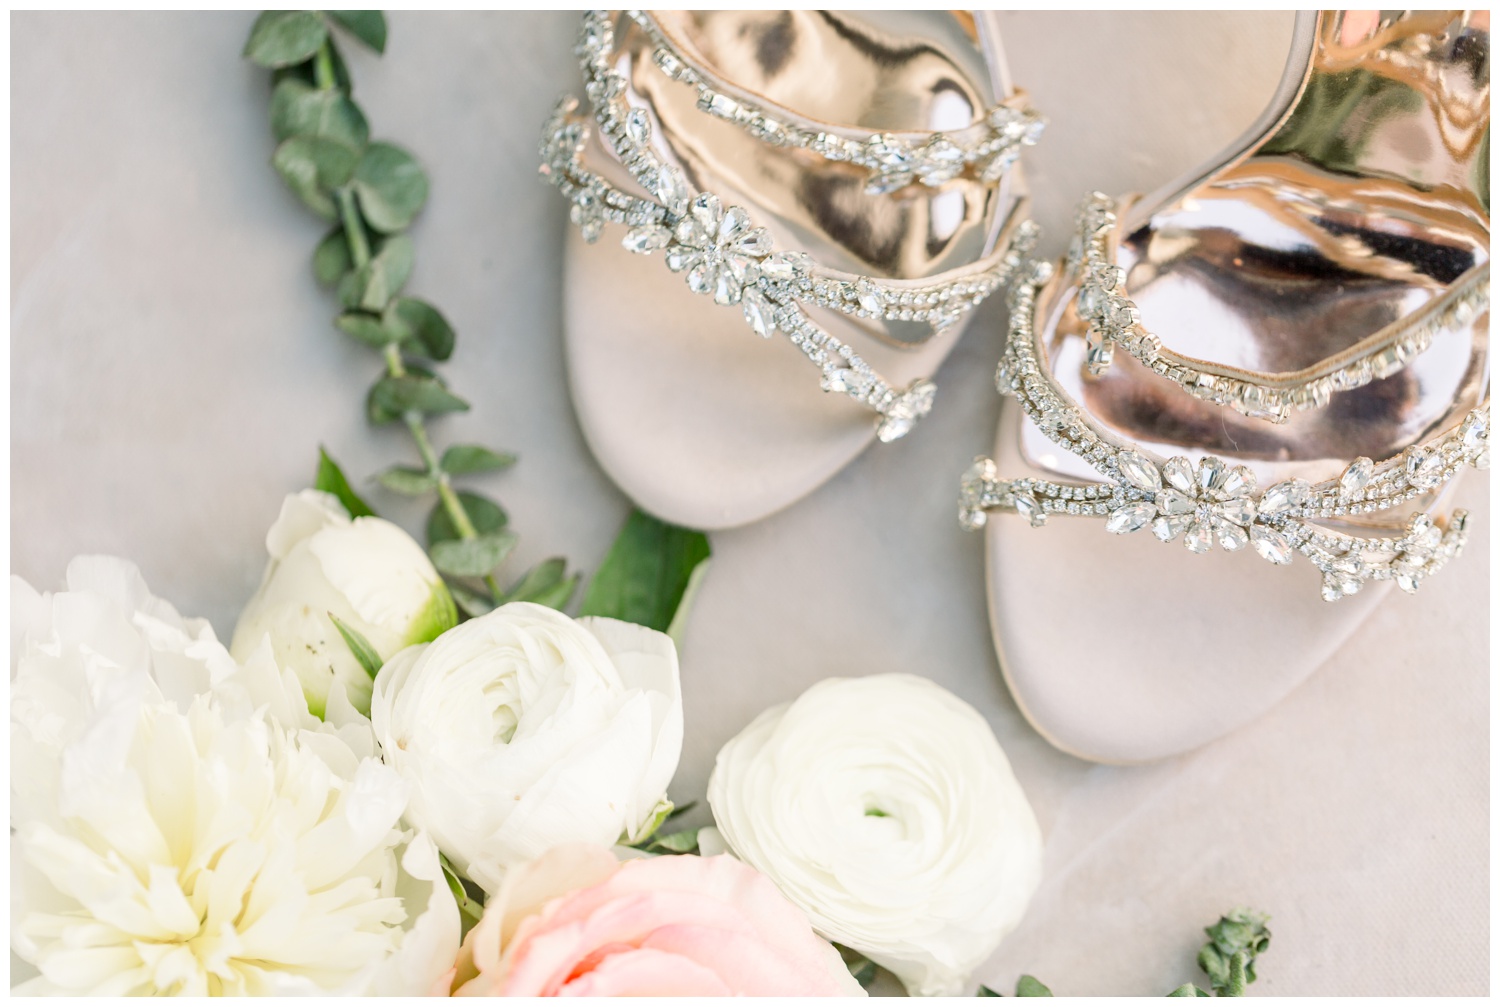 Badgley Mischka Wedding Shoes and Flowers